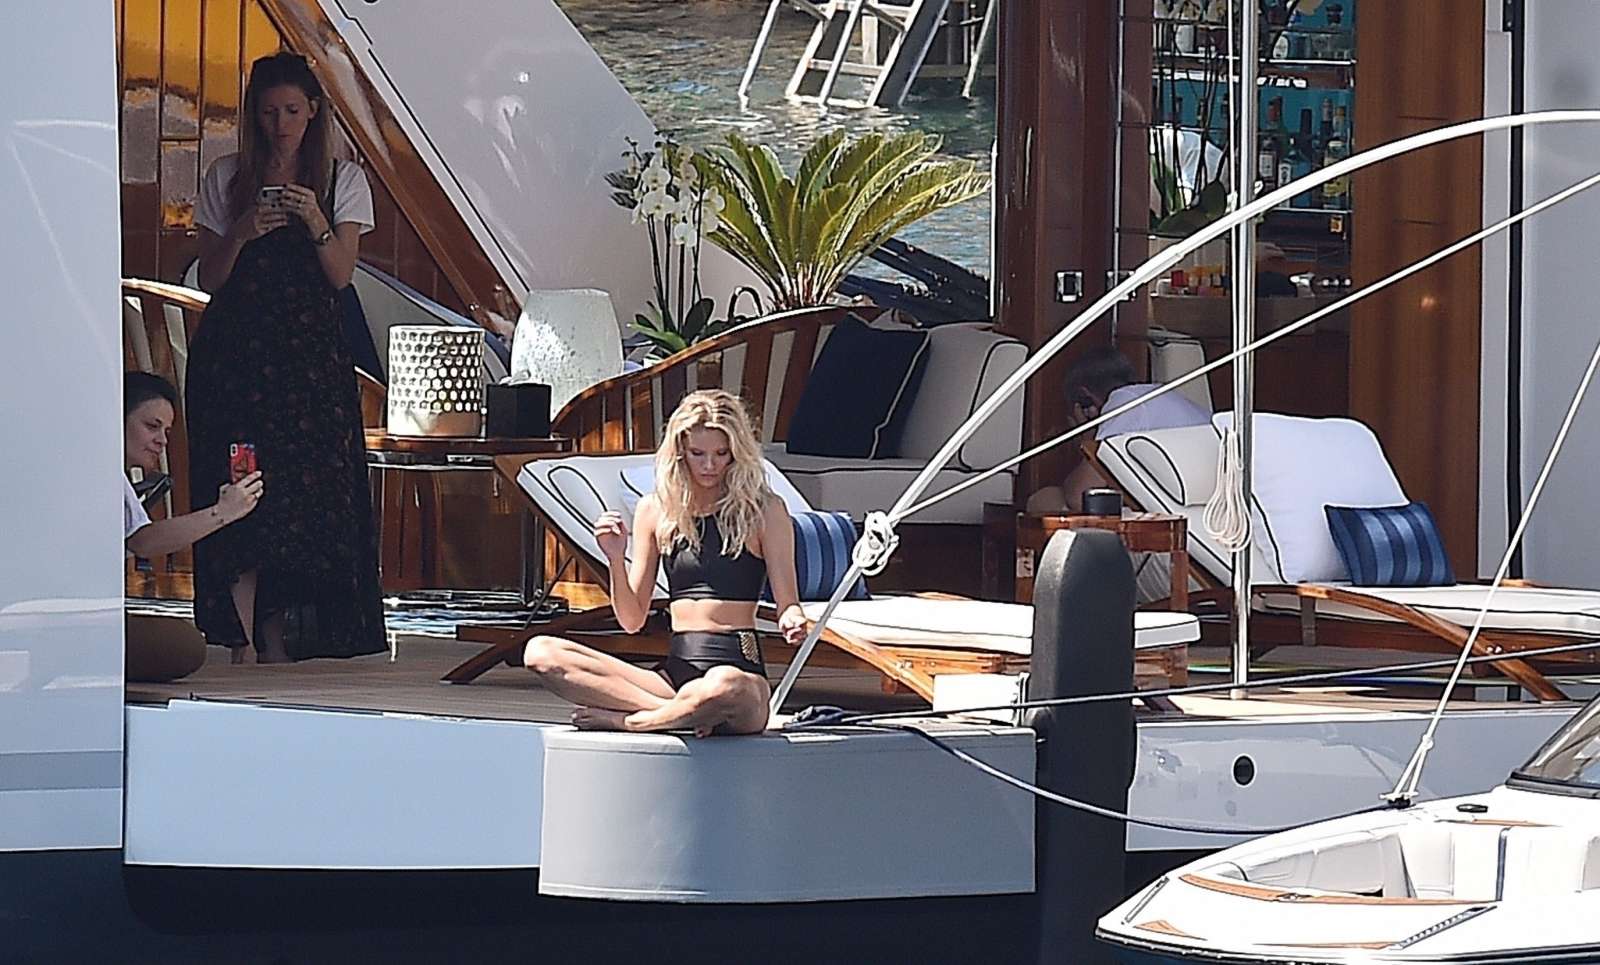 Josie Marie Canseco in Bikini and Swimsuit on a boat in Portofino